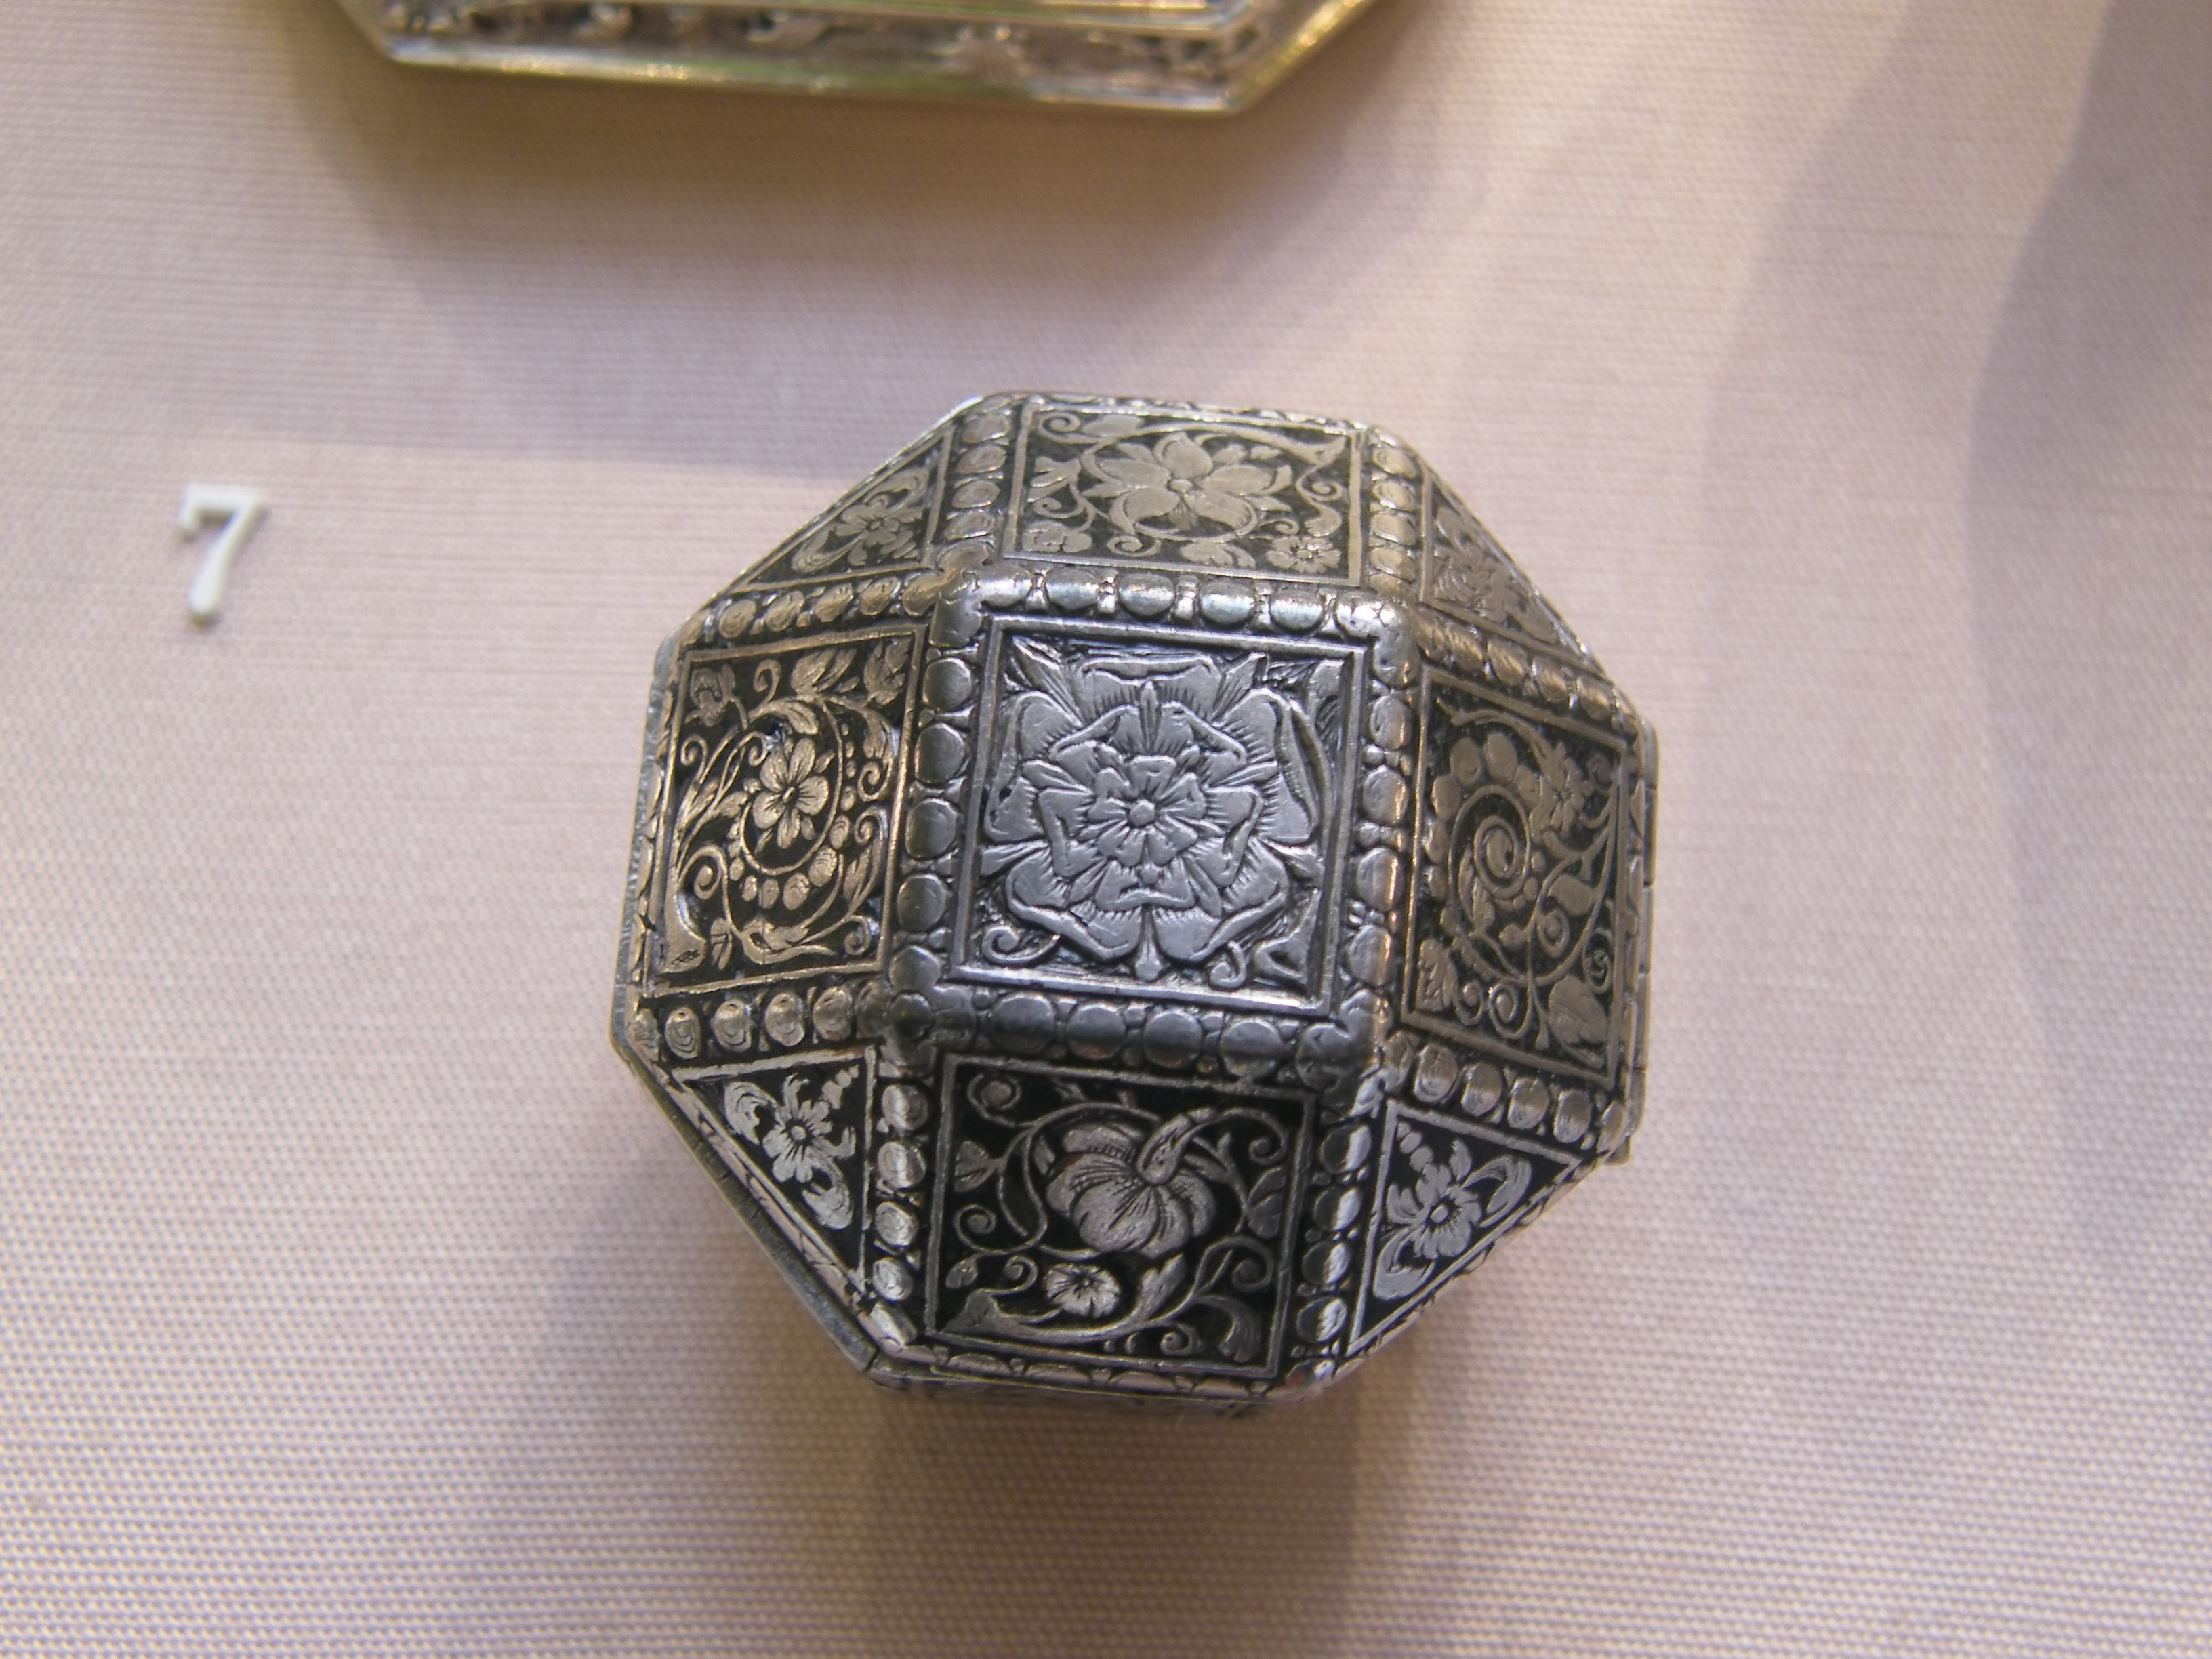 BLW Comfit or Spice box, around 1630